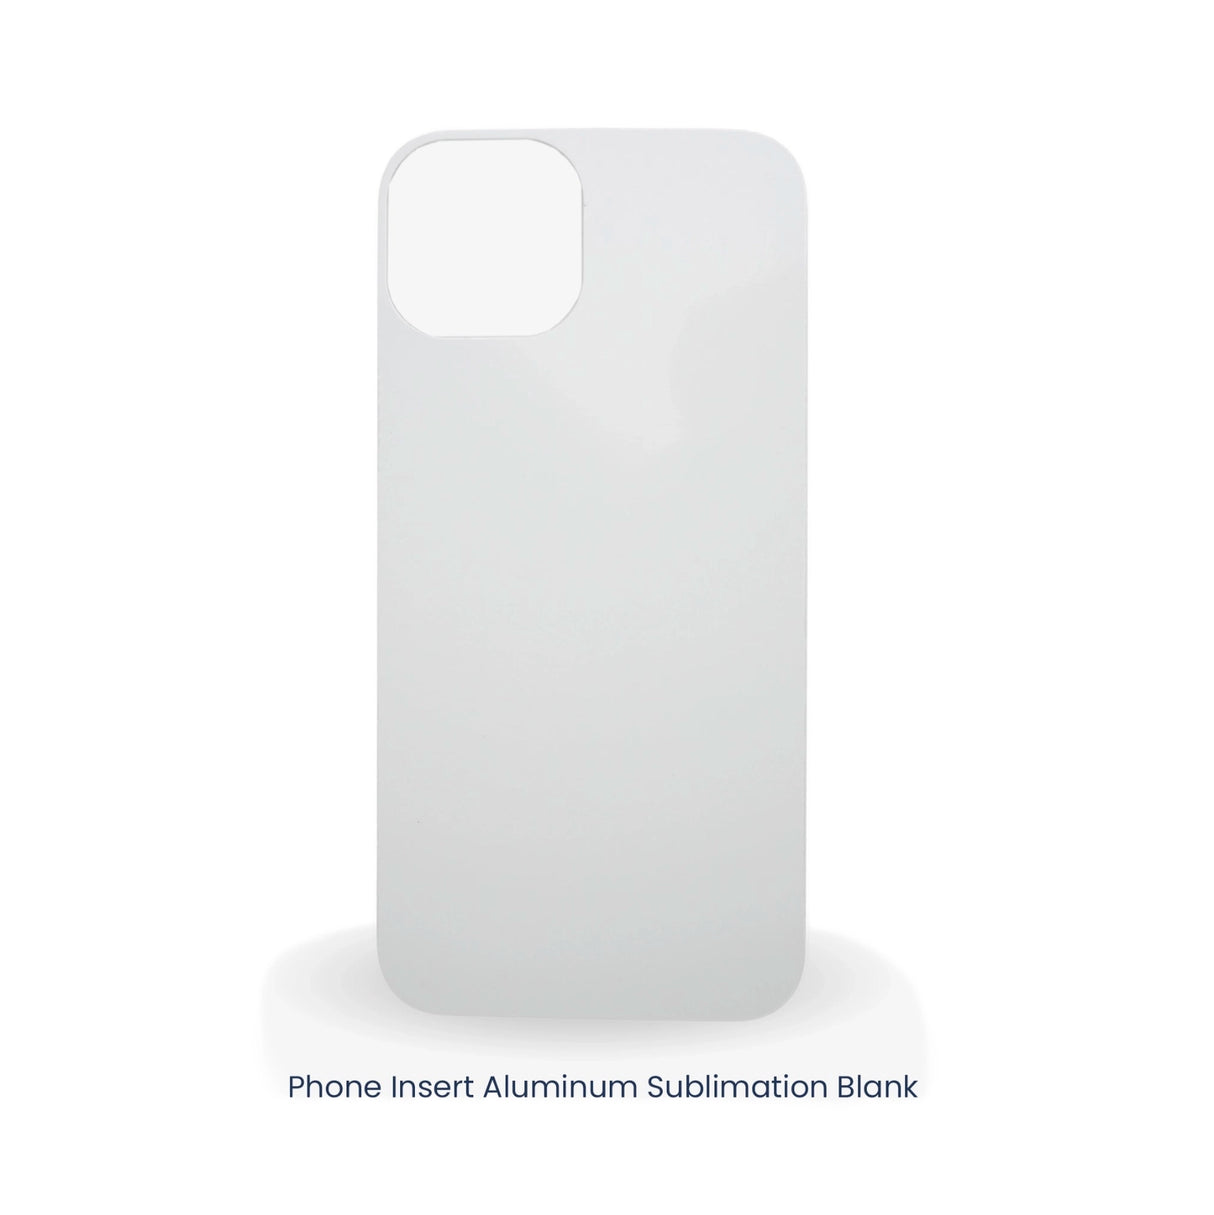 Phone Insert Aluminum Sublimation Blank